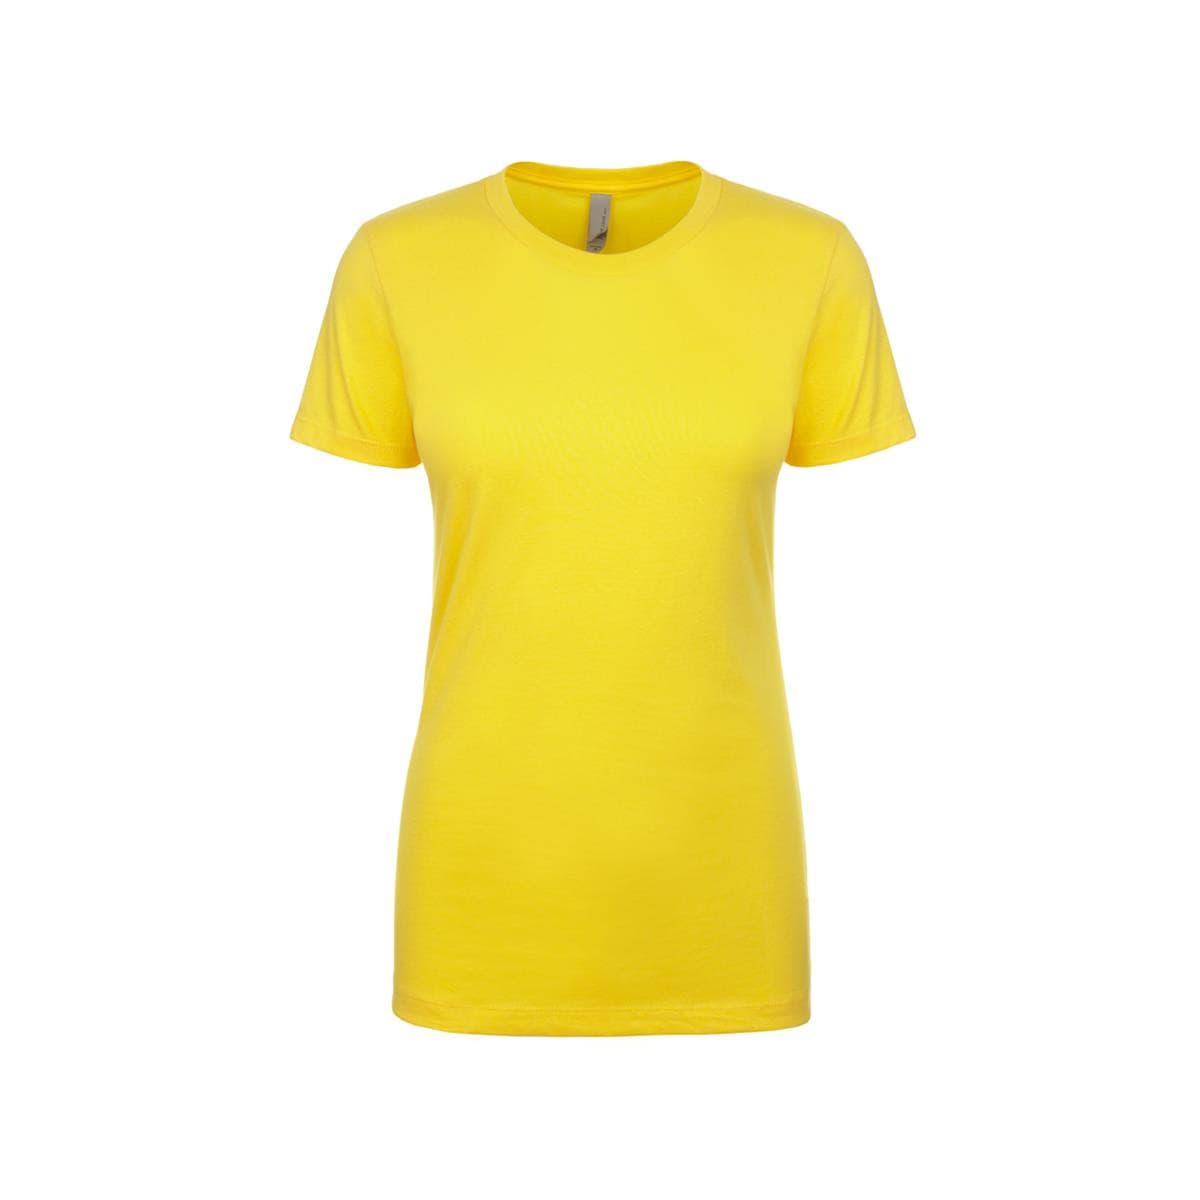 Vibrant Yellow Next Level Women's Boyfriend T-Shirt